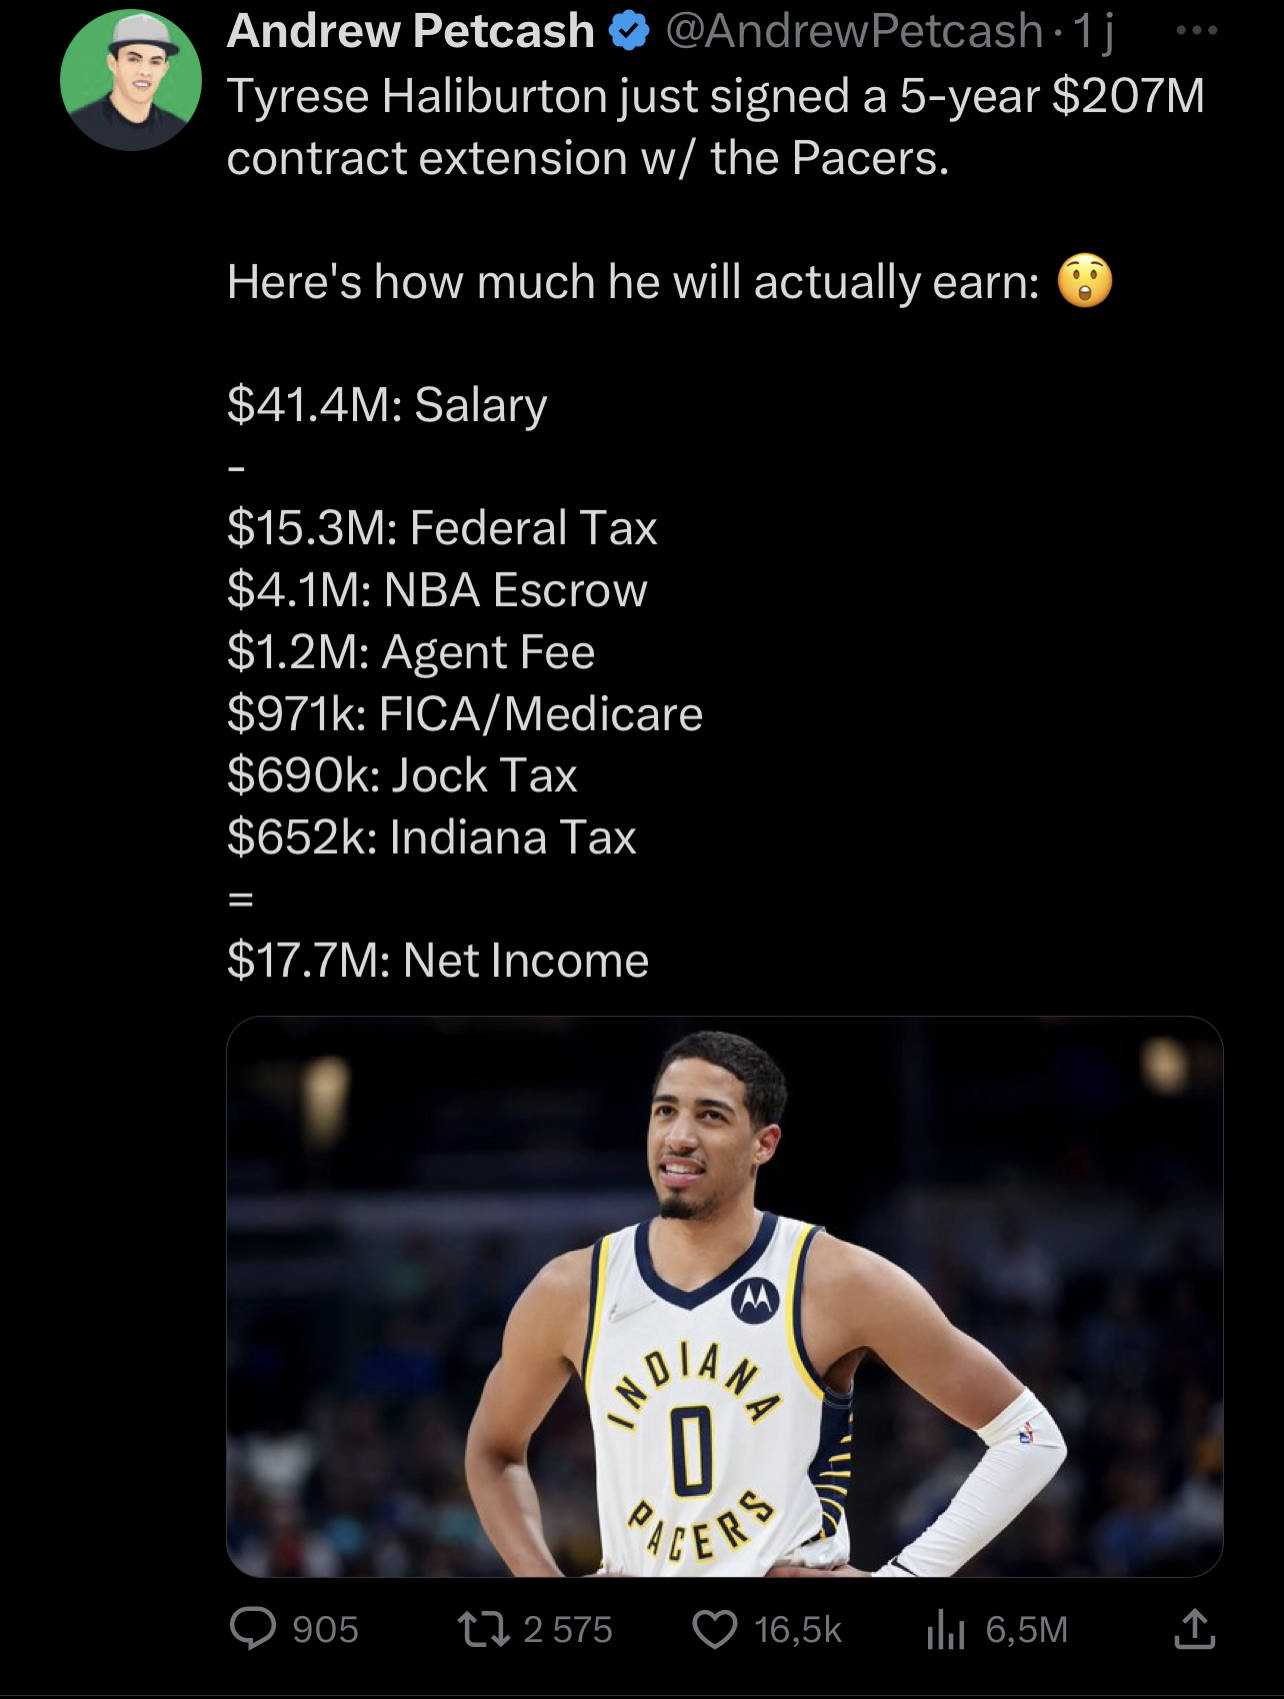 James Harden Contract, Salary & Career NBA Earnings - Boardroom